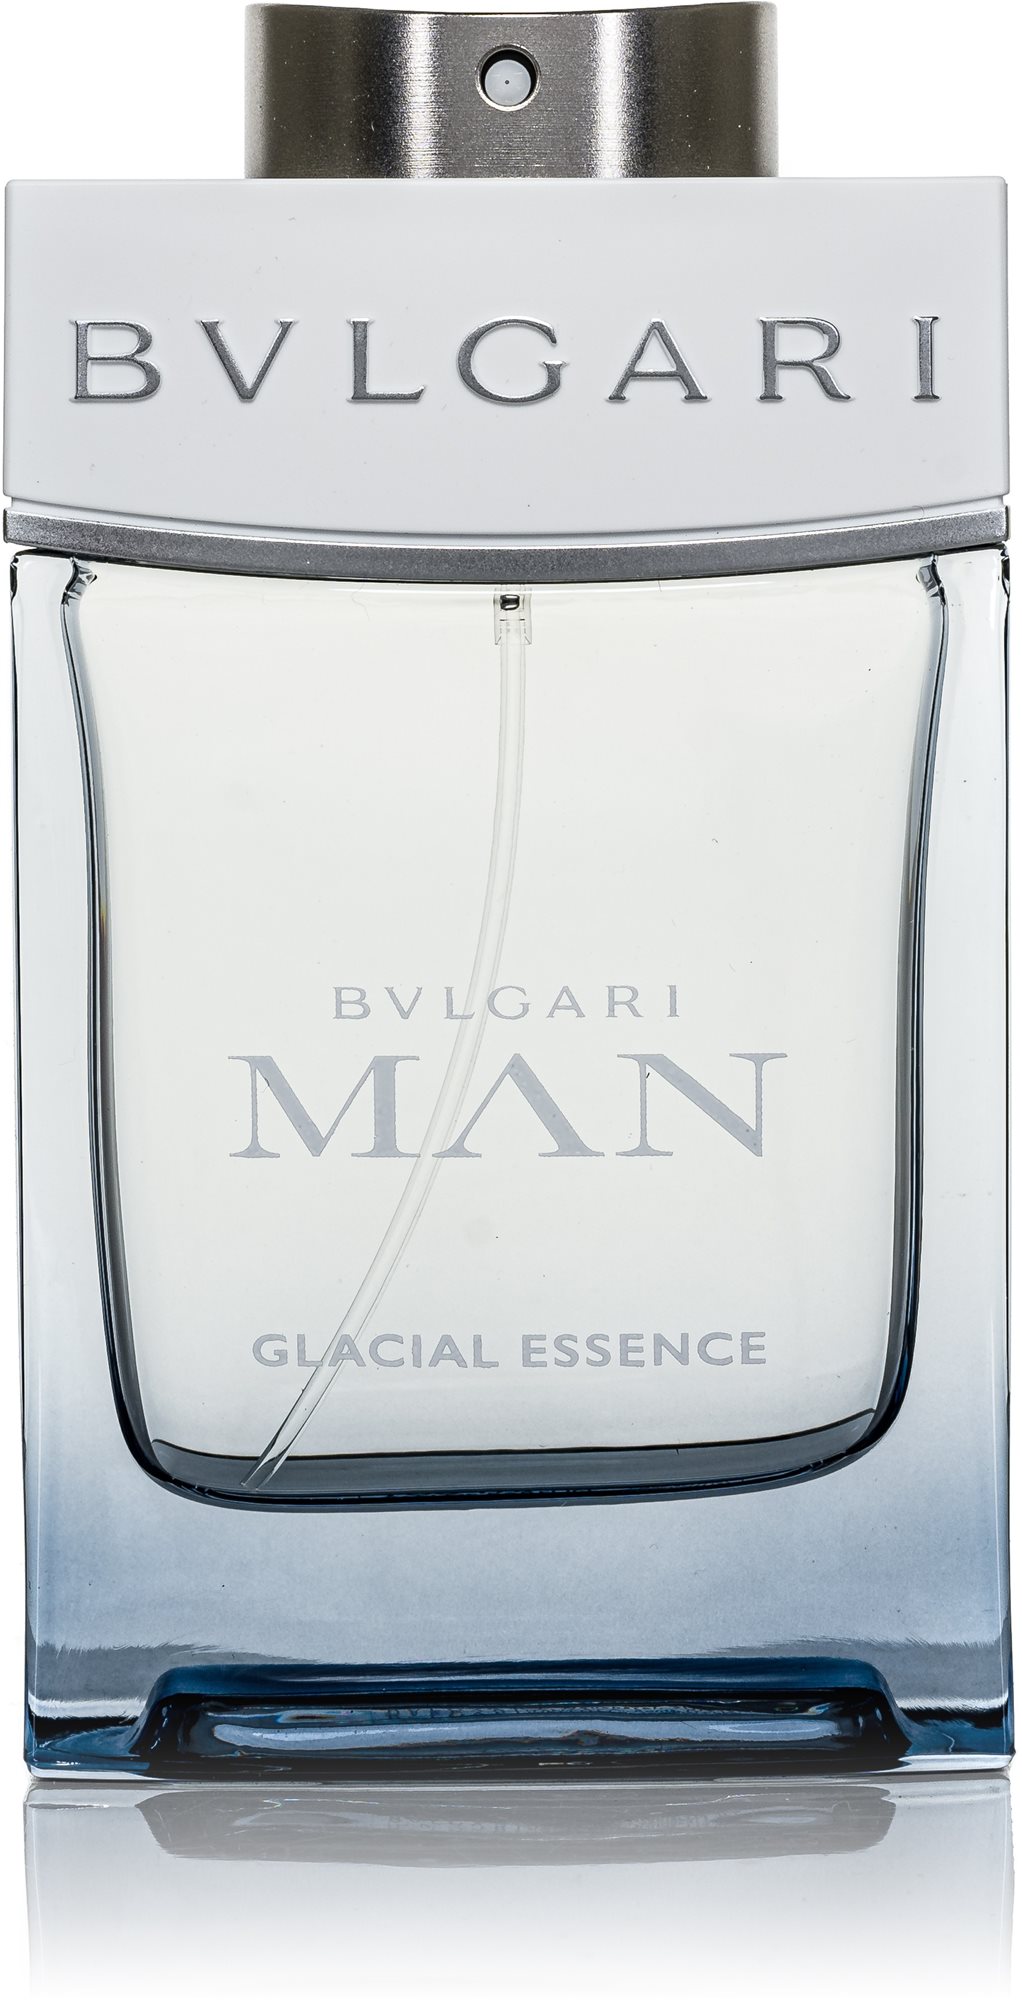 BVLGARI Man Glacial Essence EdP 100 ml